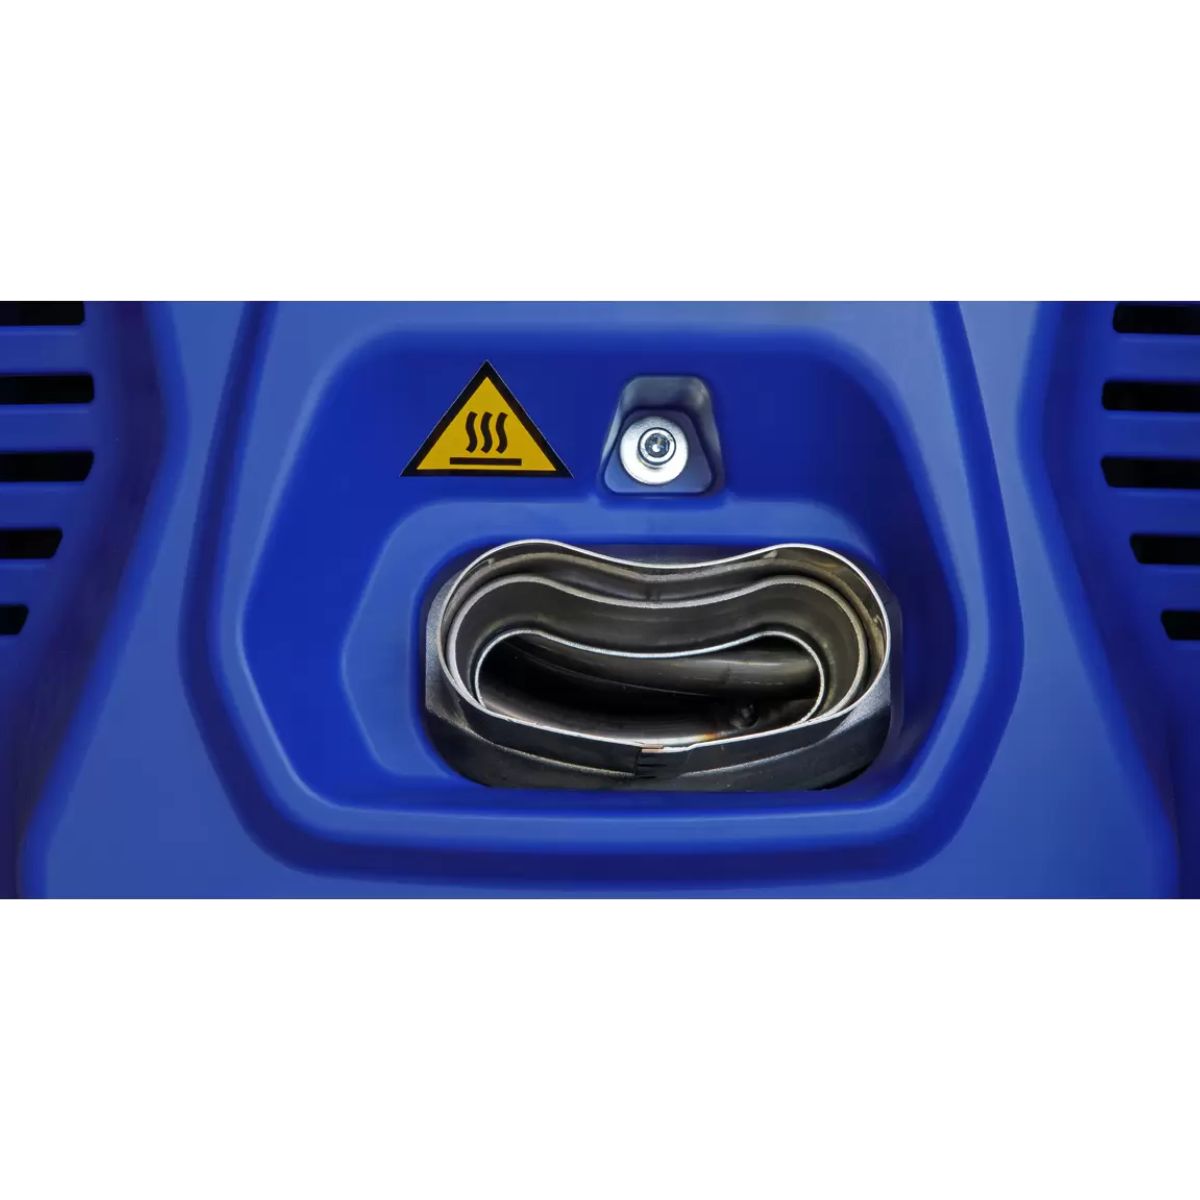 Sealey PW2000HW Hot Water Pressure Washer 135bar 230V